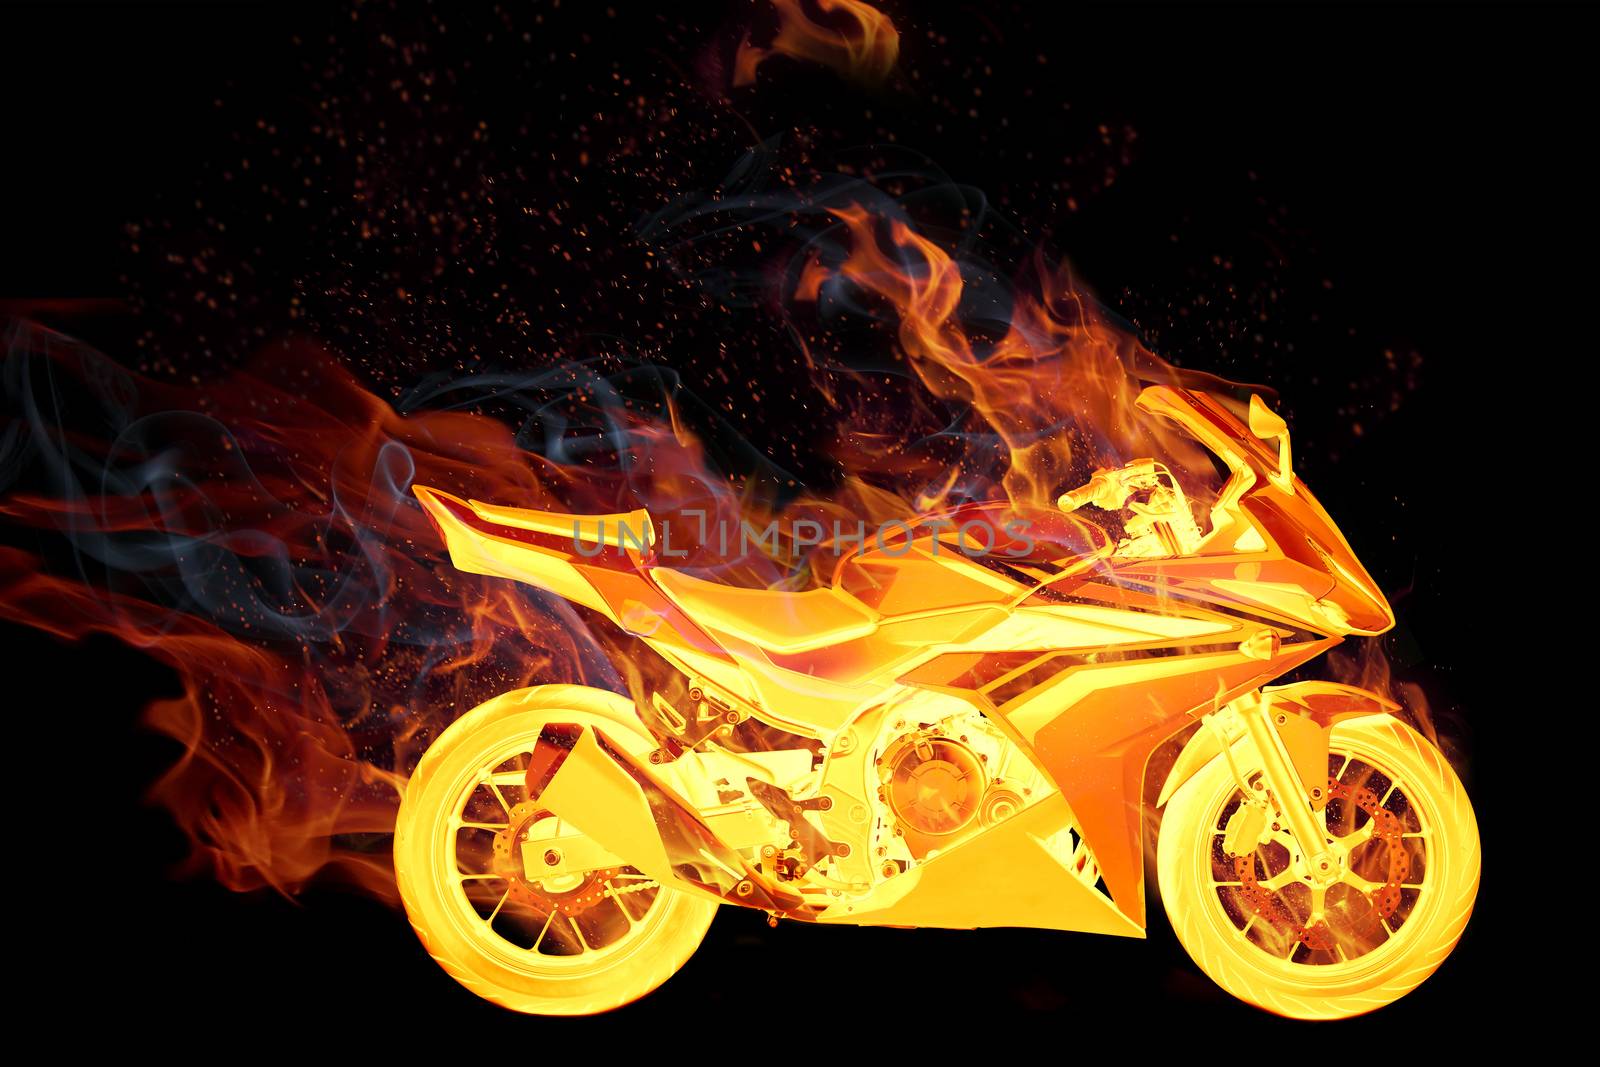 bike in fire on black background